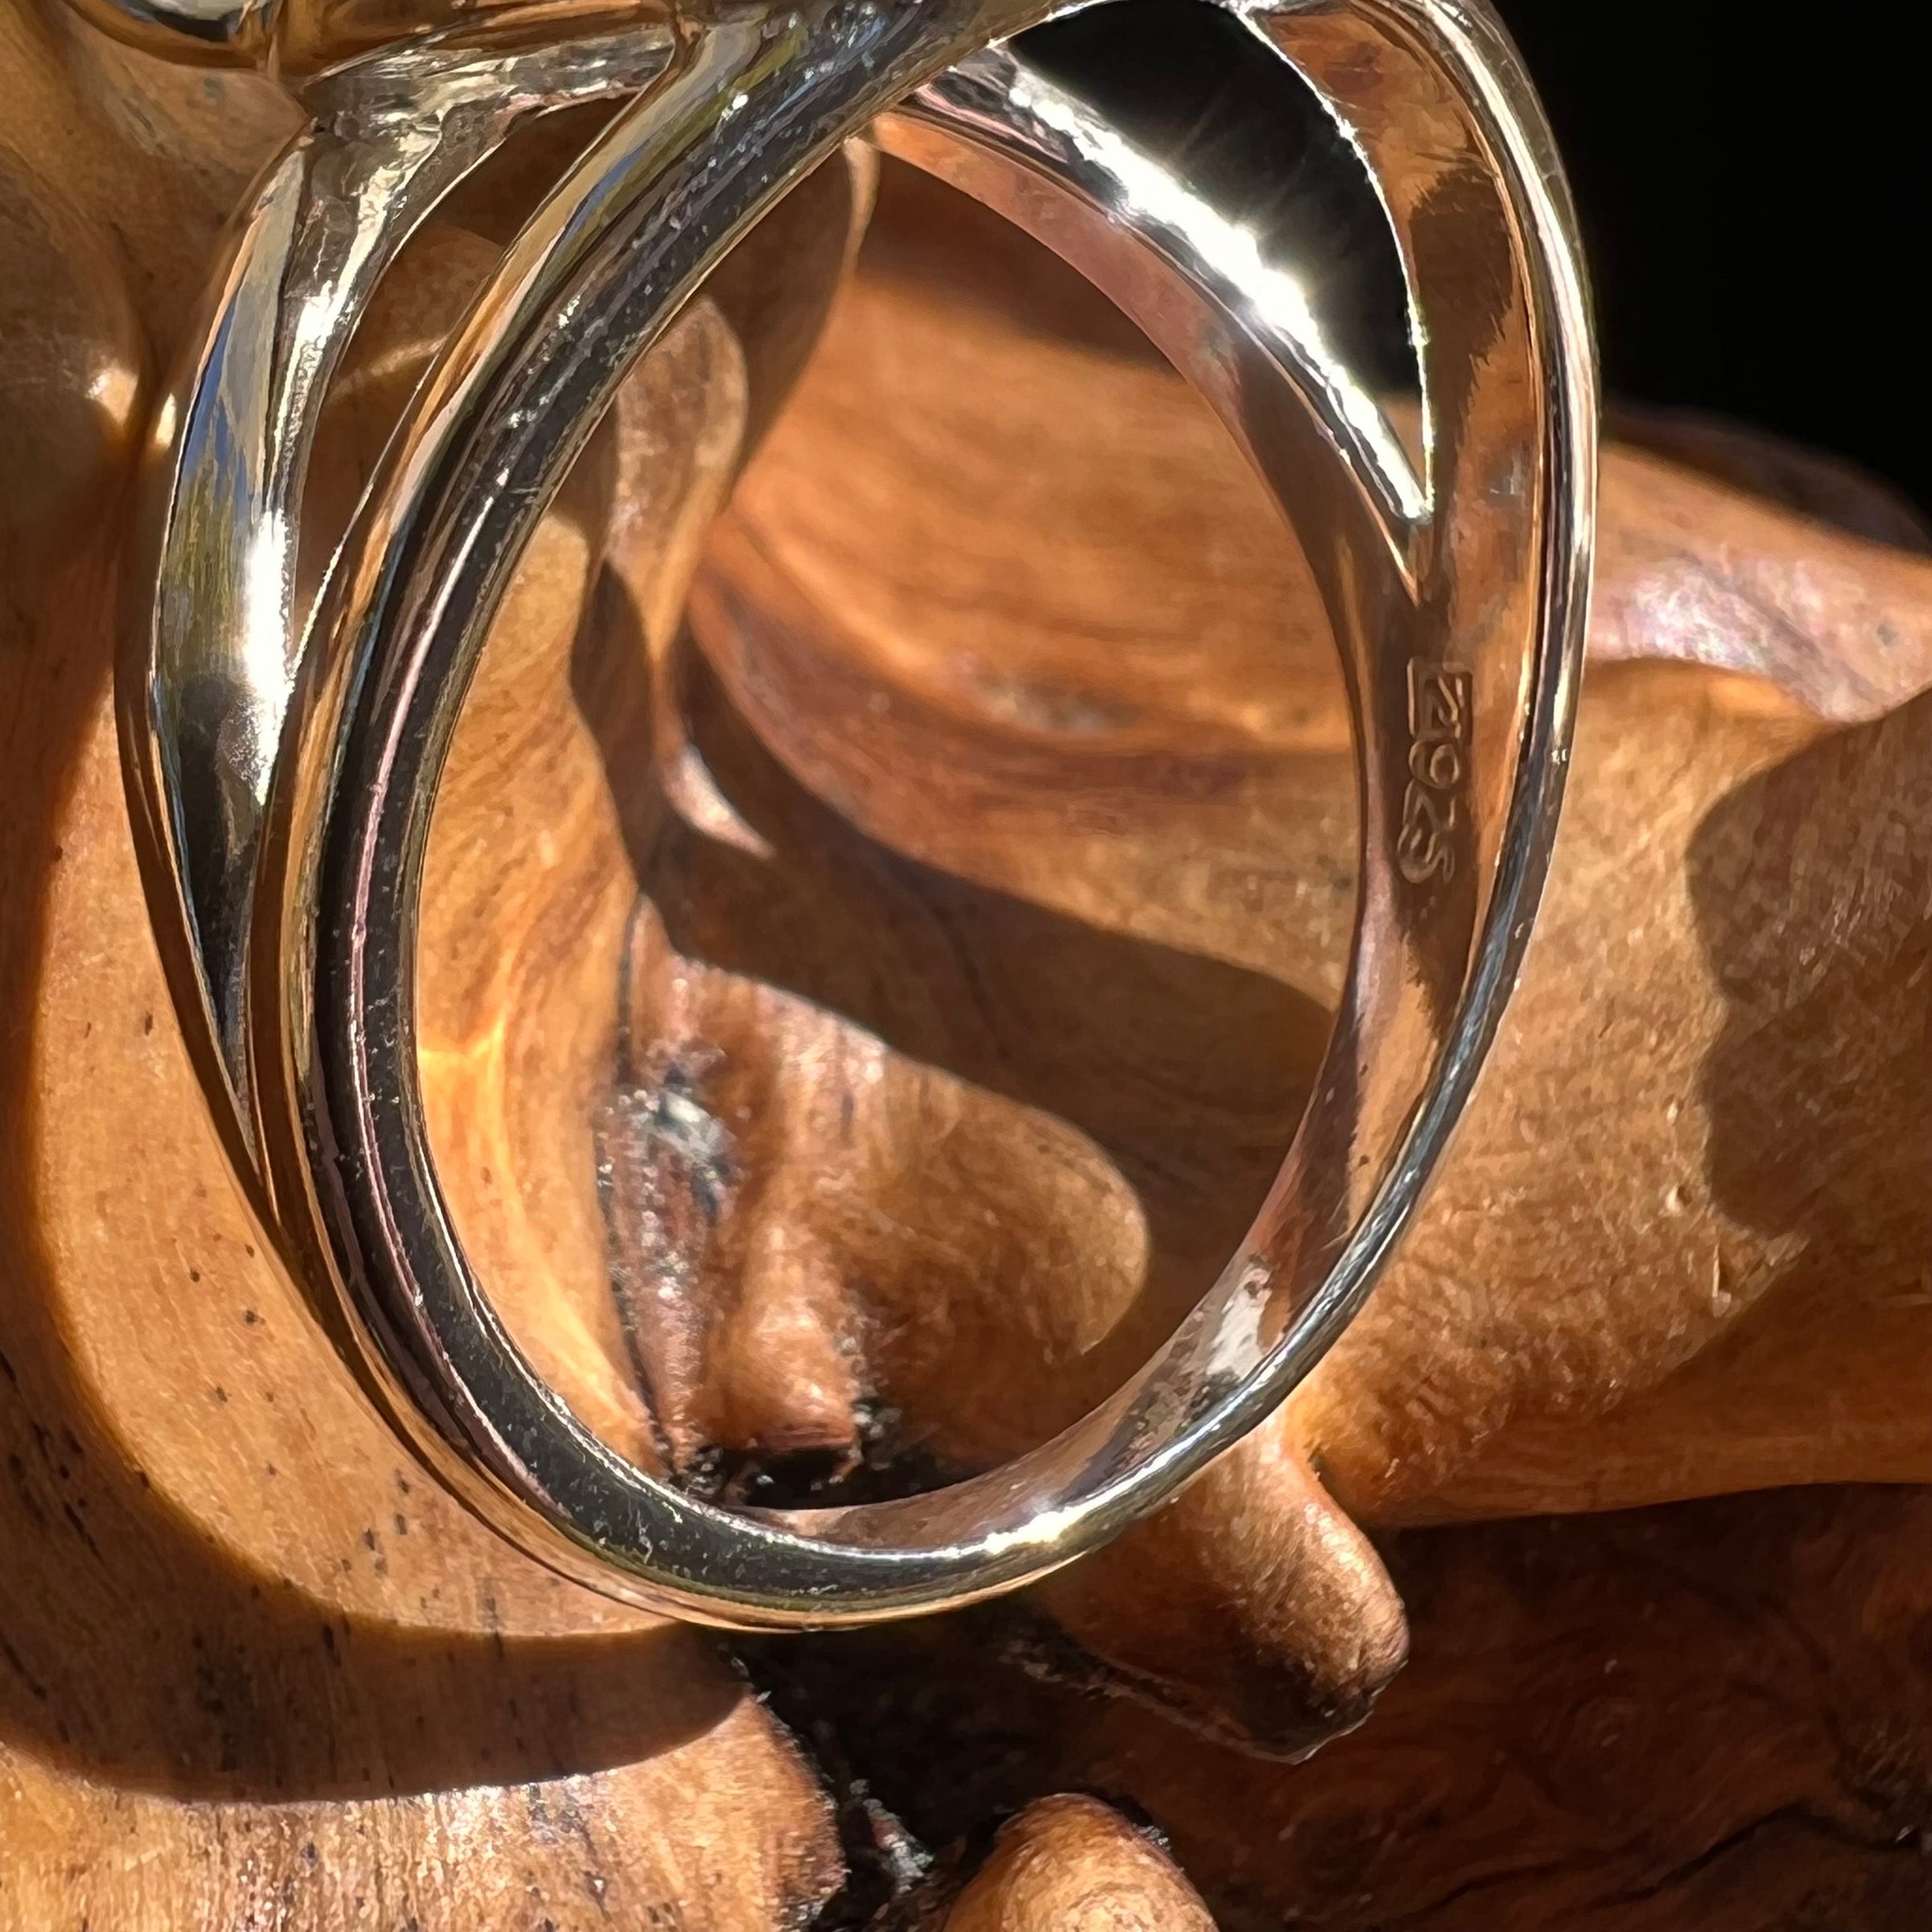 Raw Libyan Desert Glass Ring Size 9.75 #2981-Moldavite Life